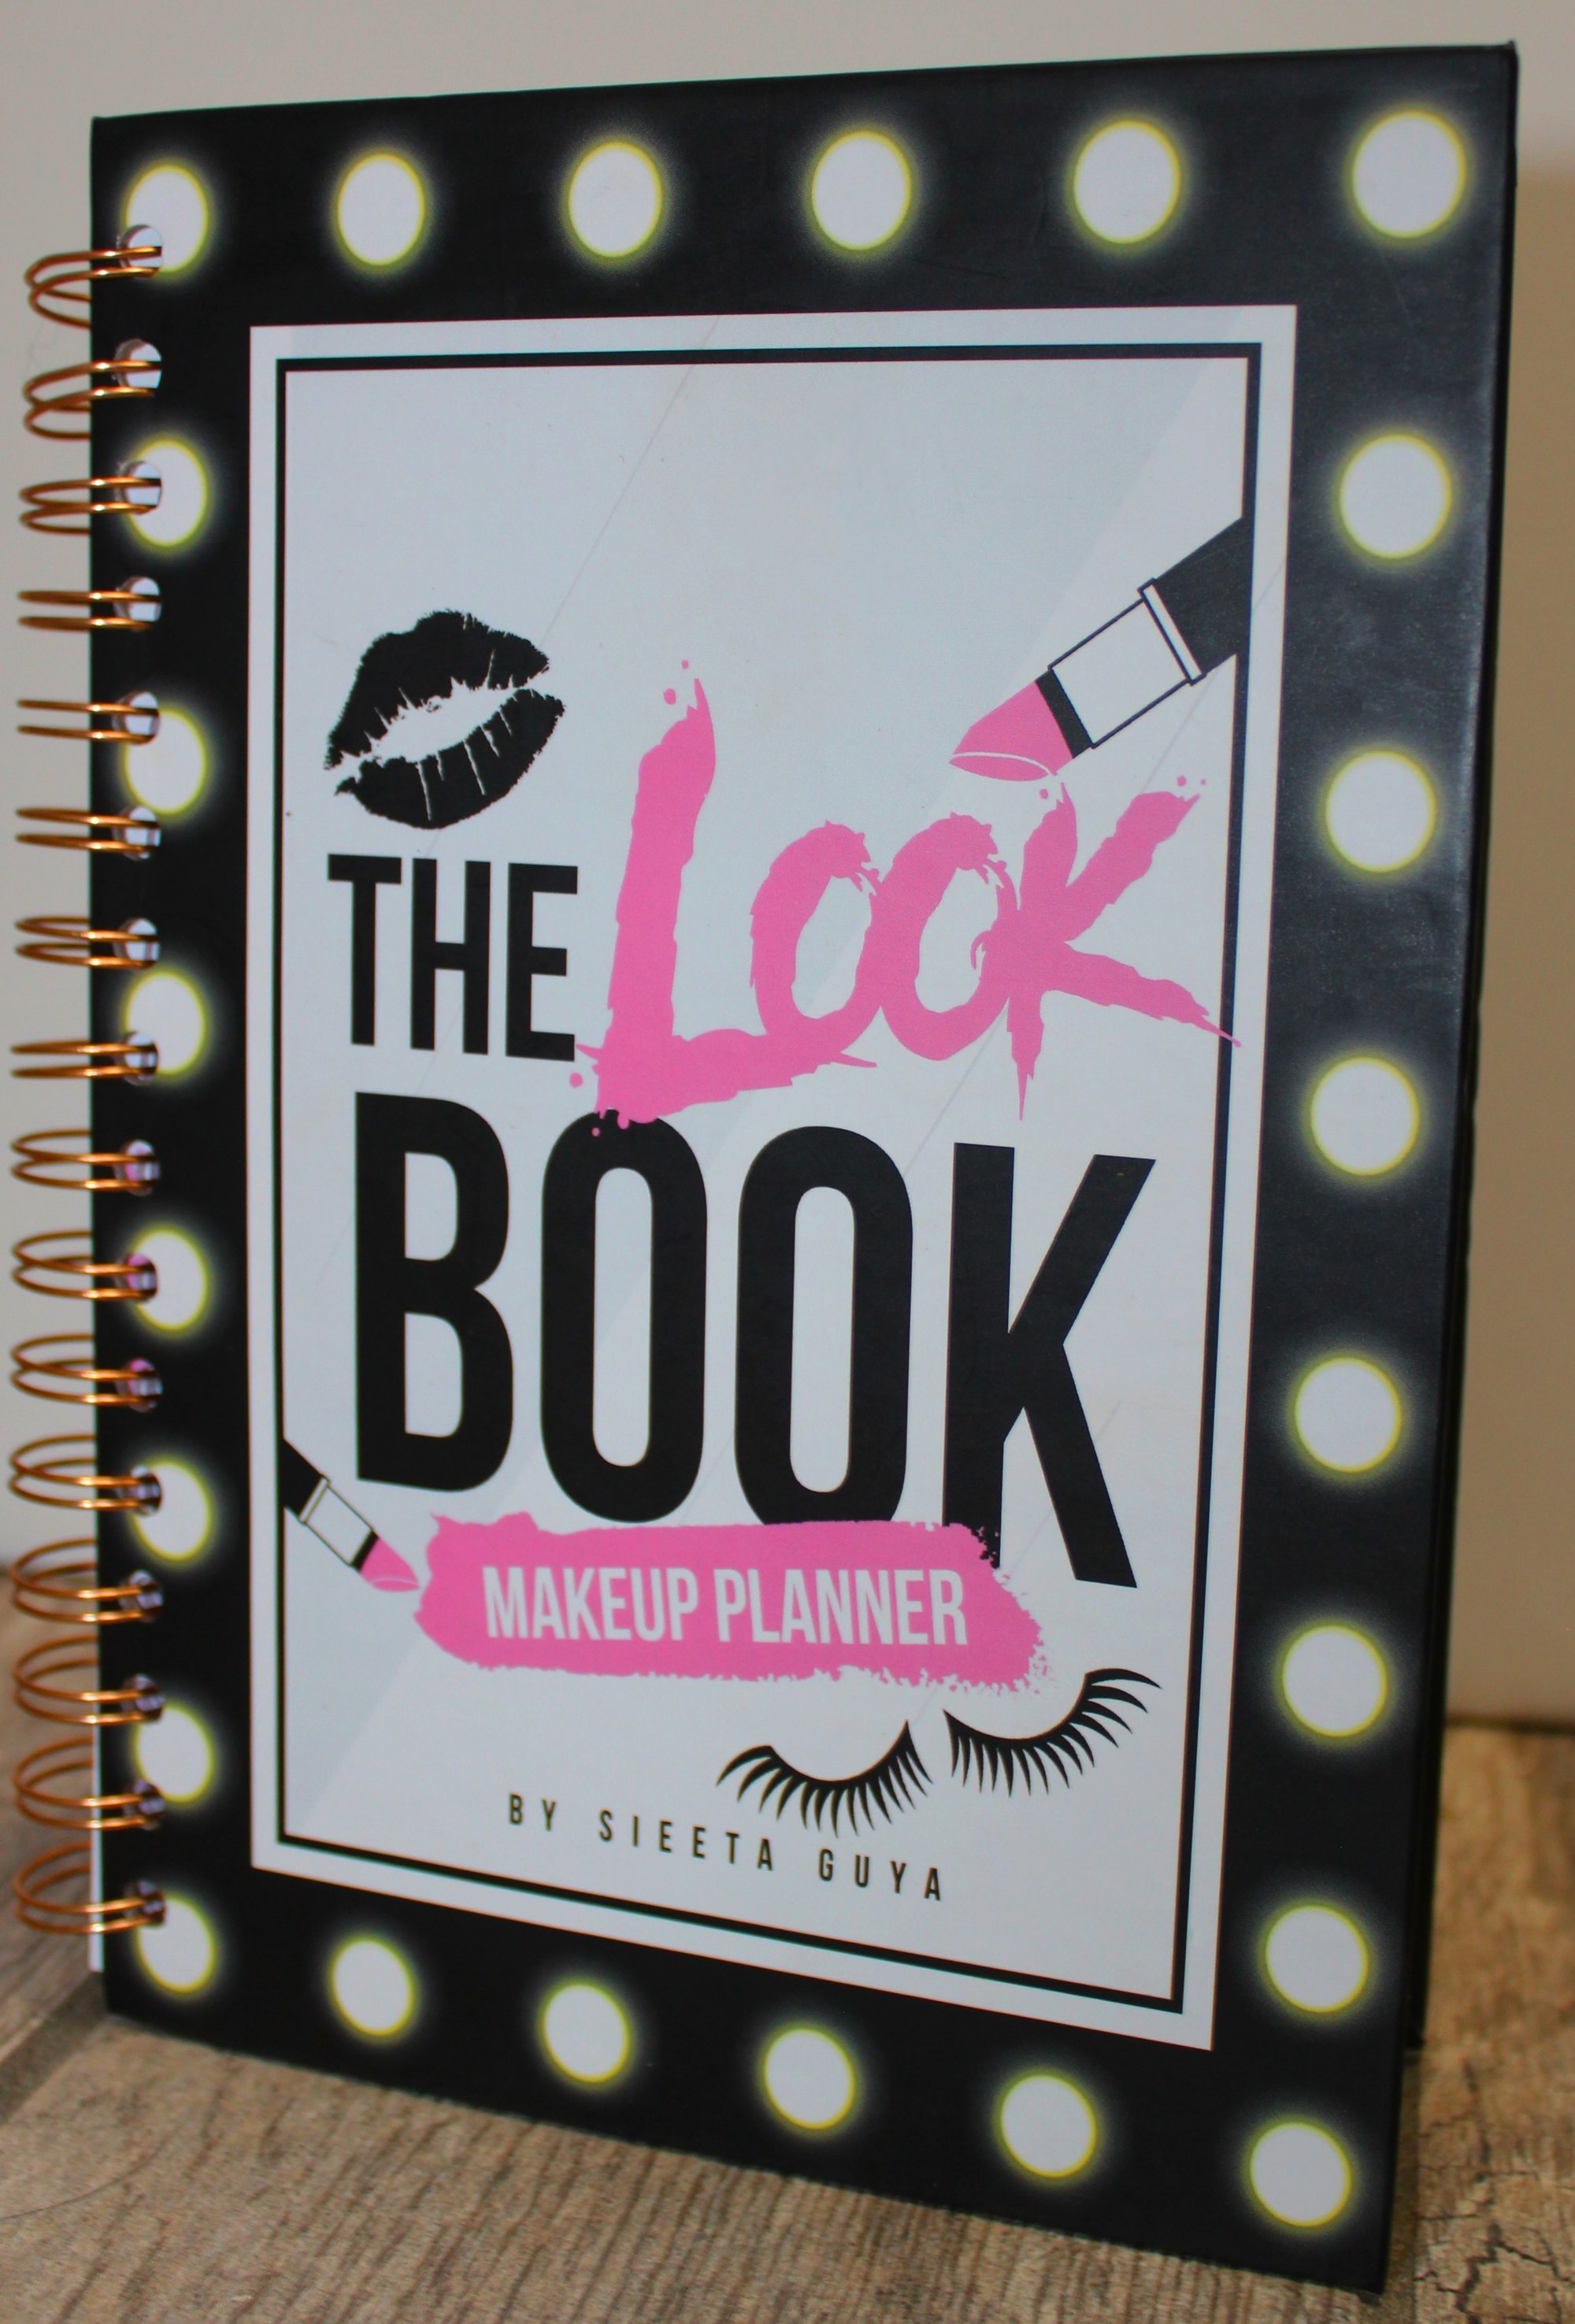 The Book Makeup Planner | The Look Book Makeup